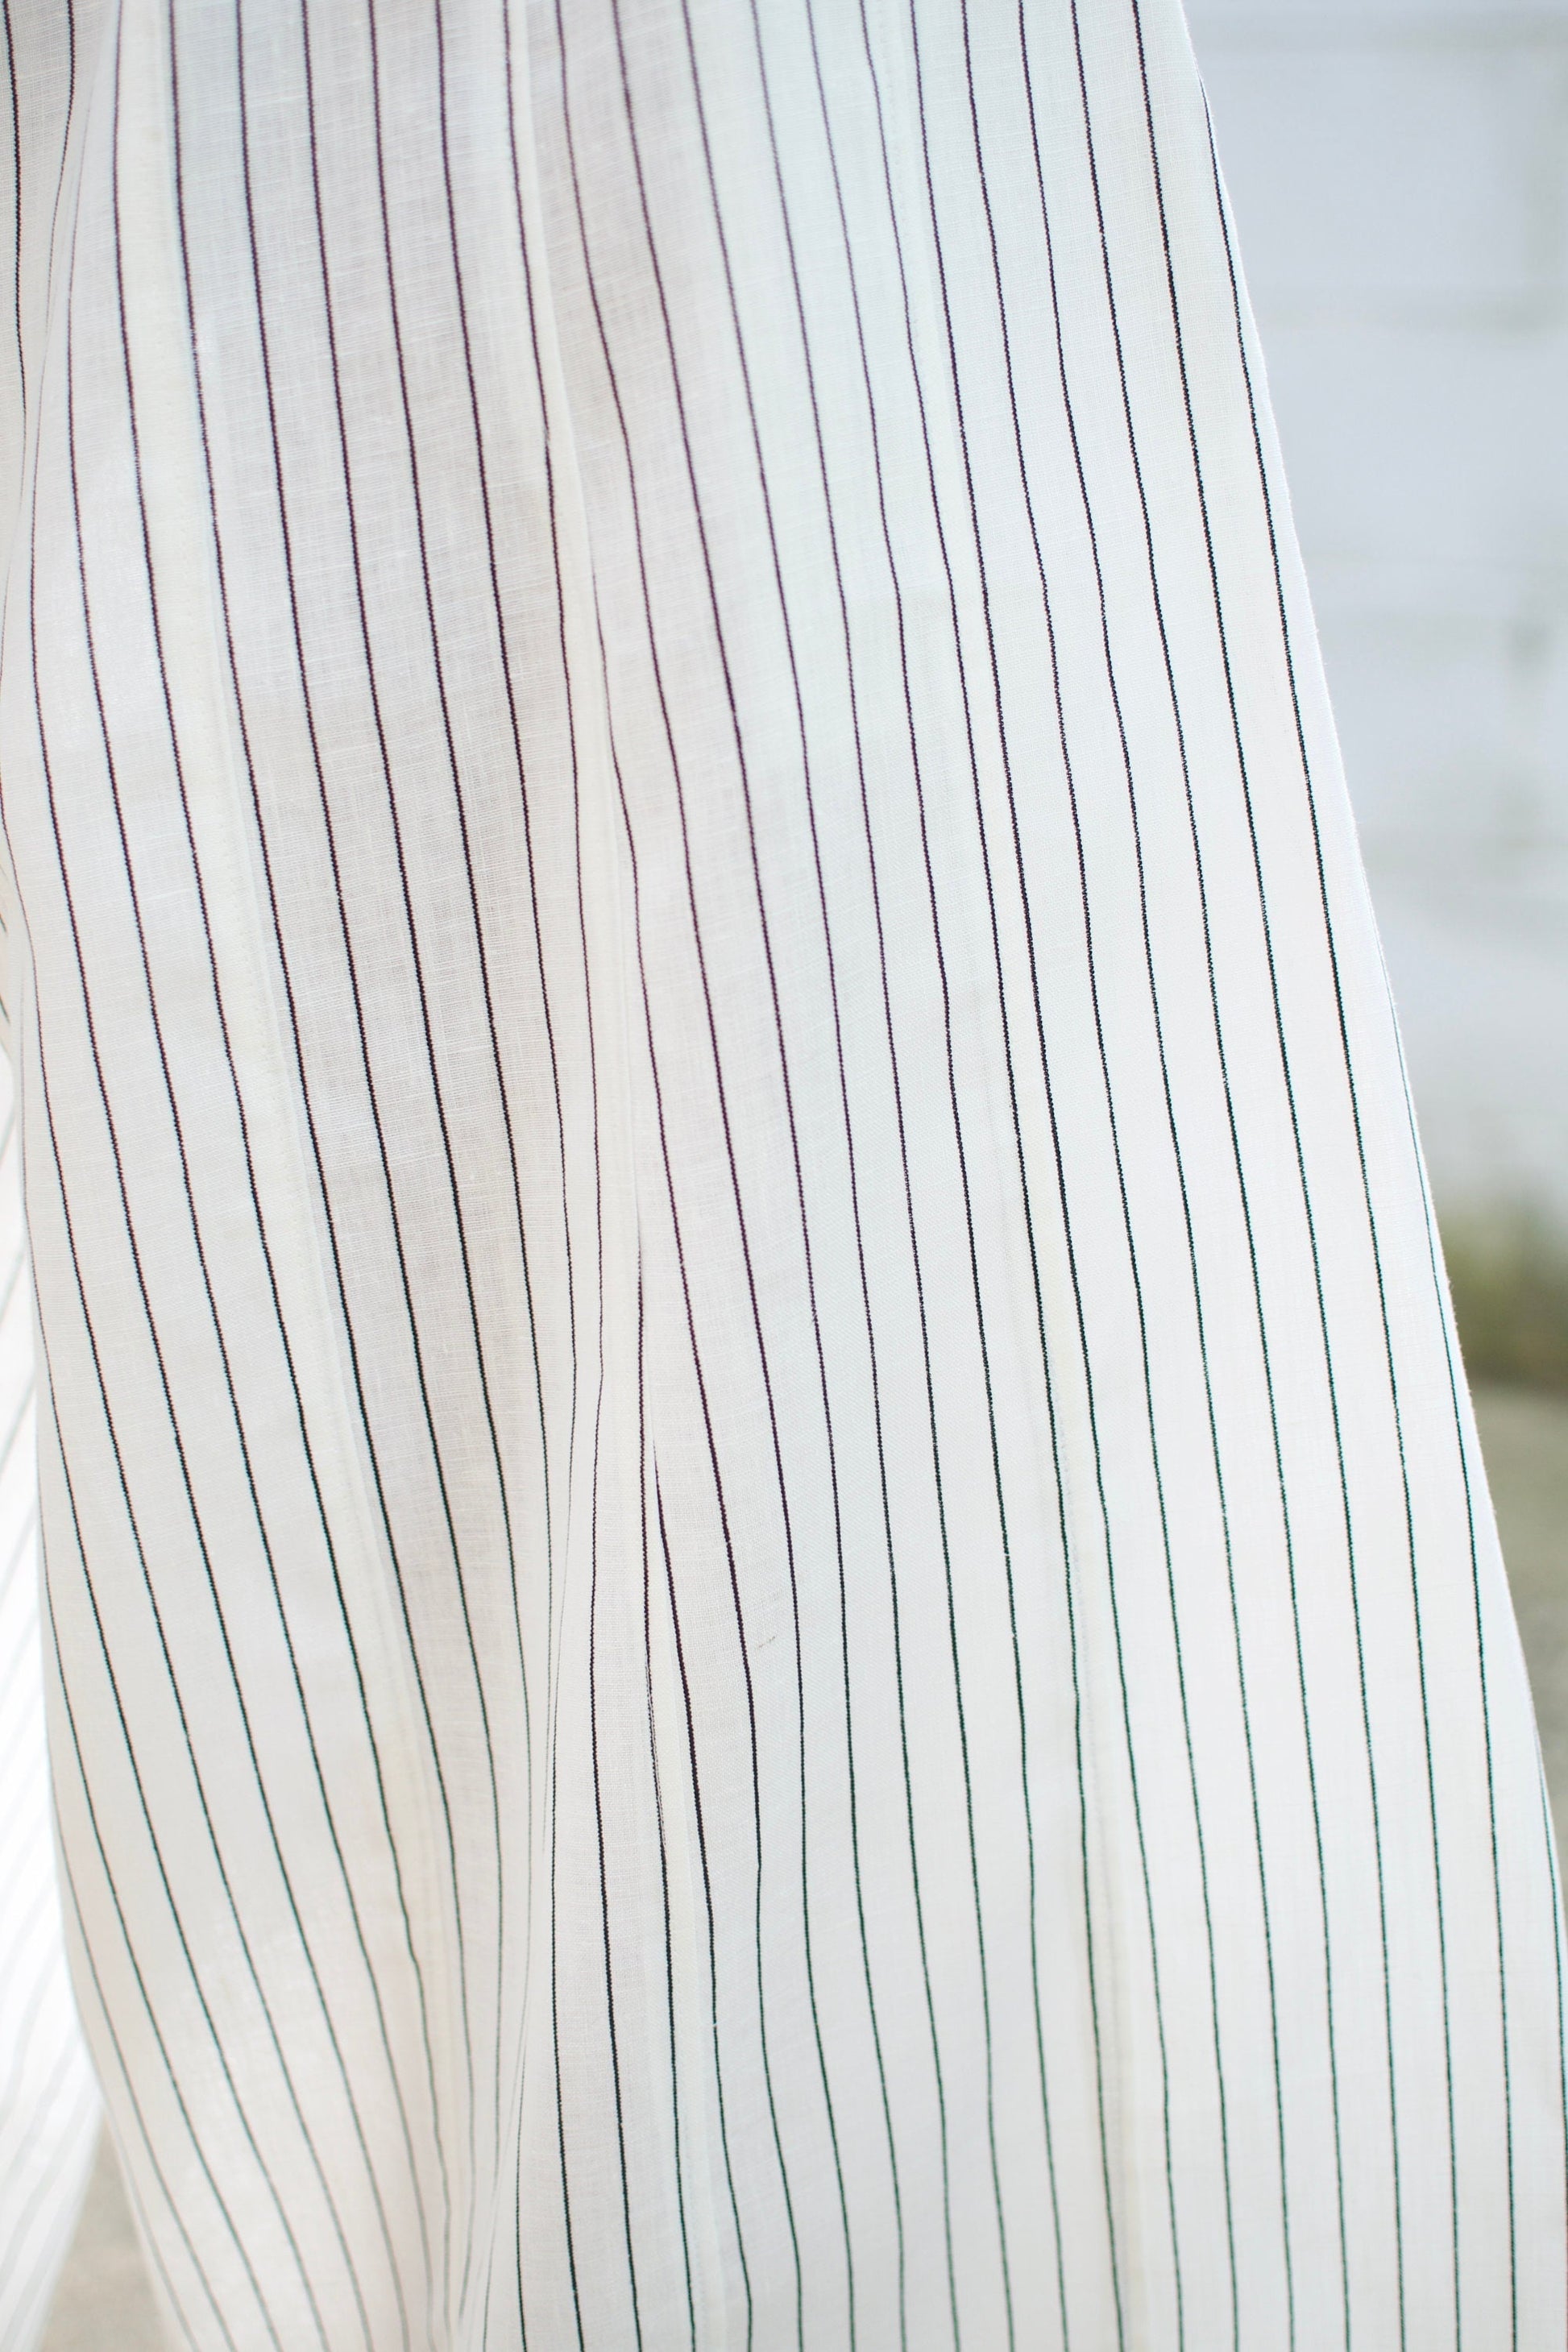 MALA handworks  Lyla Linen pants in White and Stripe